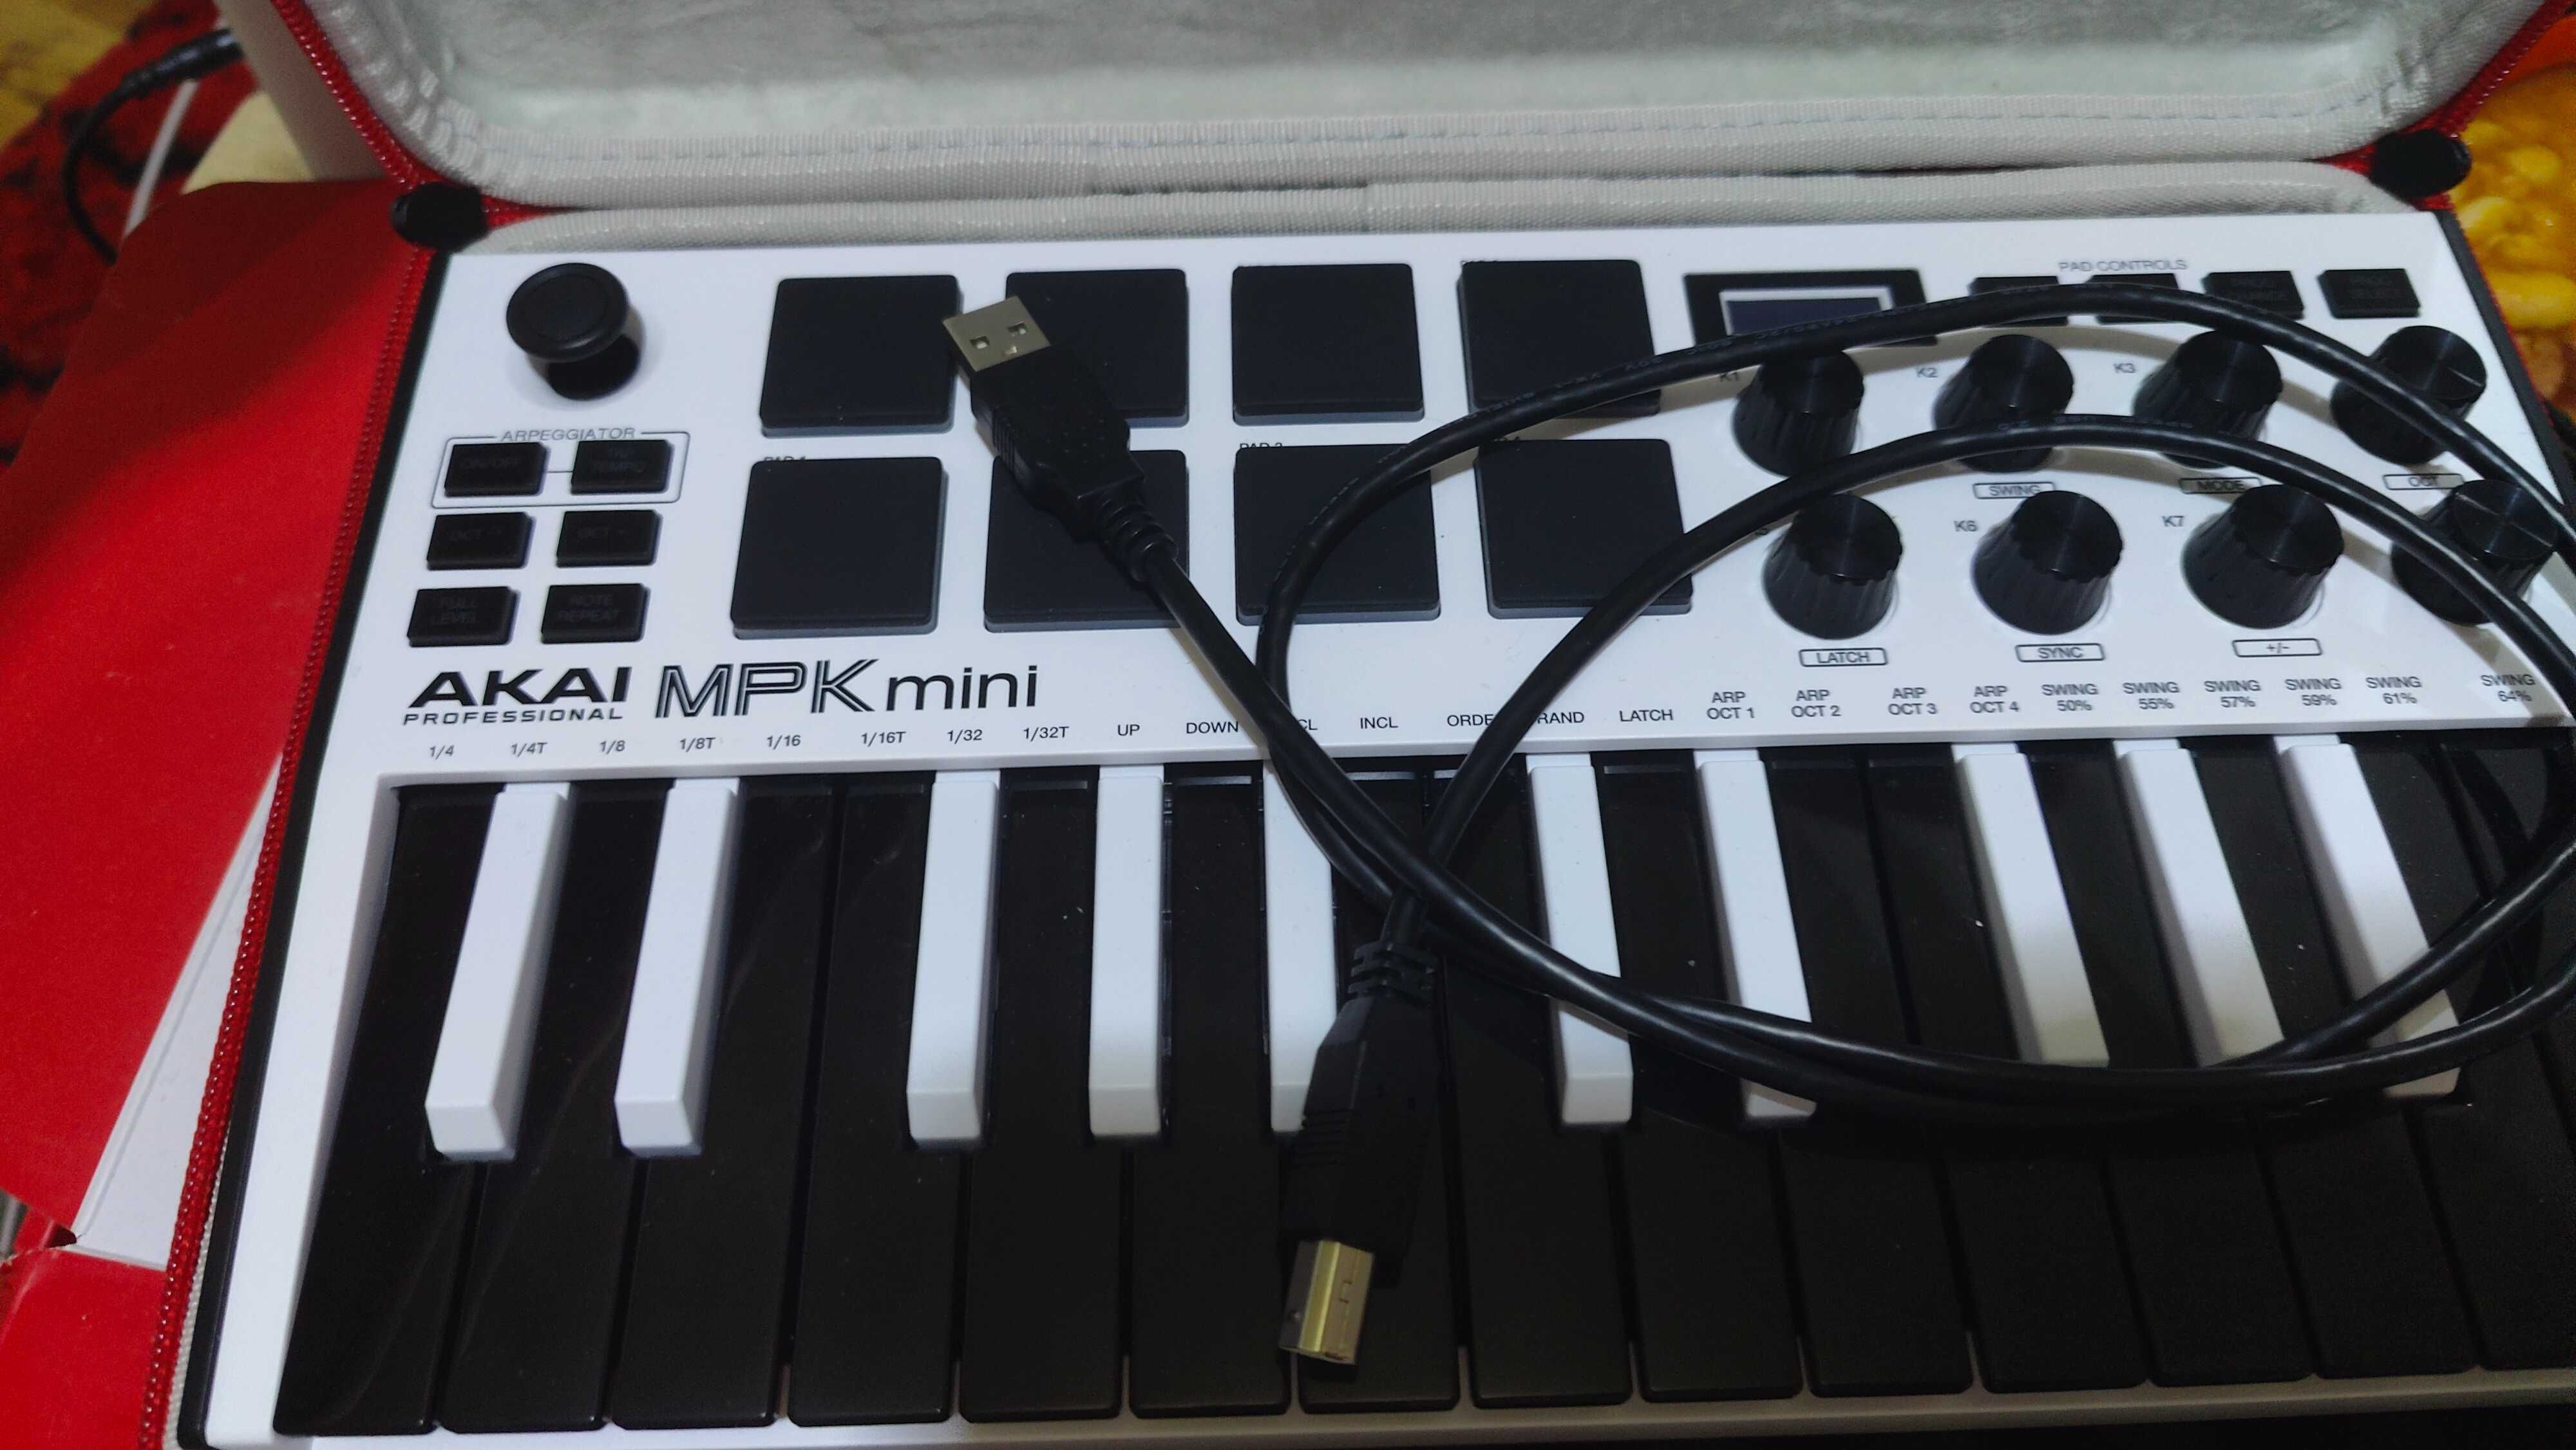 MPK Mini 3 Akai professional